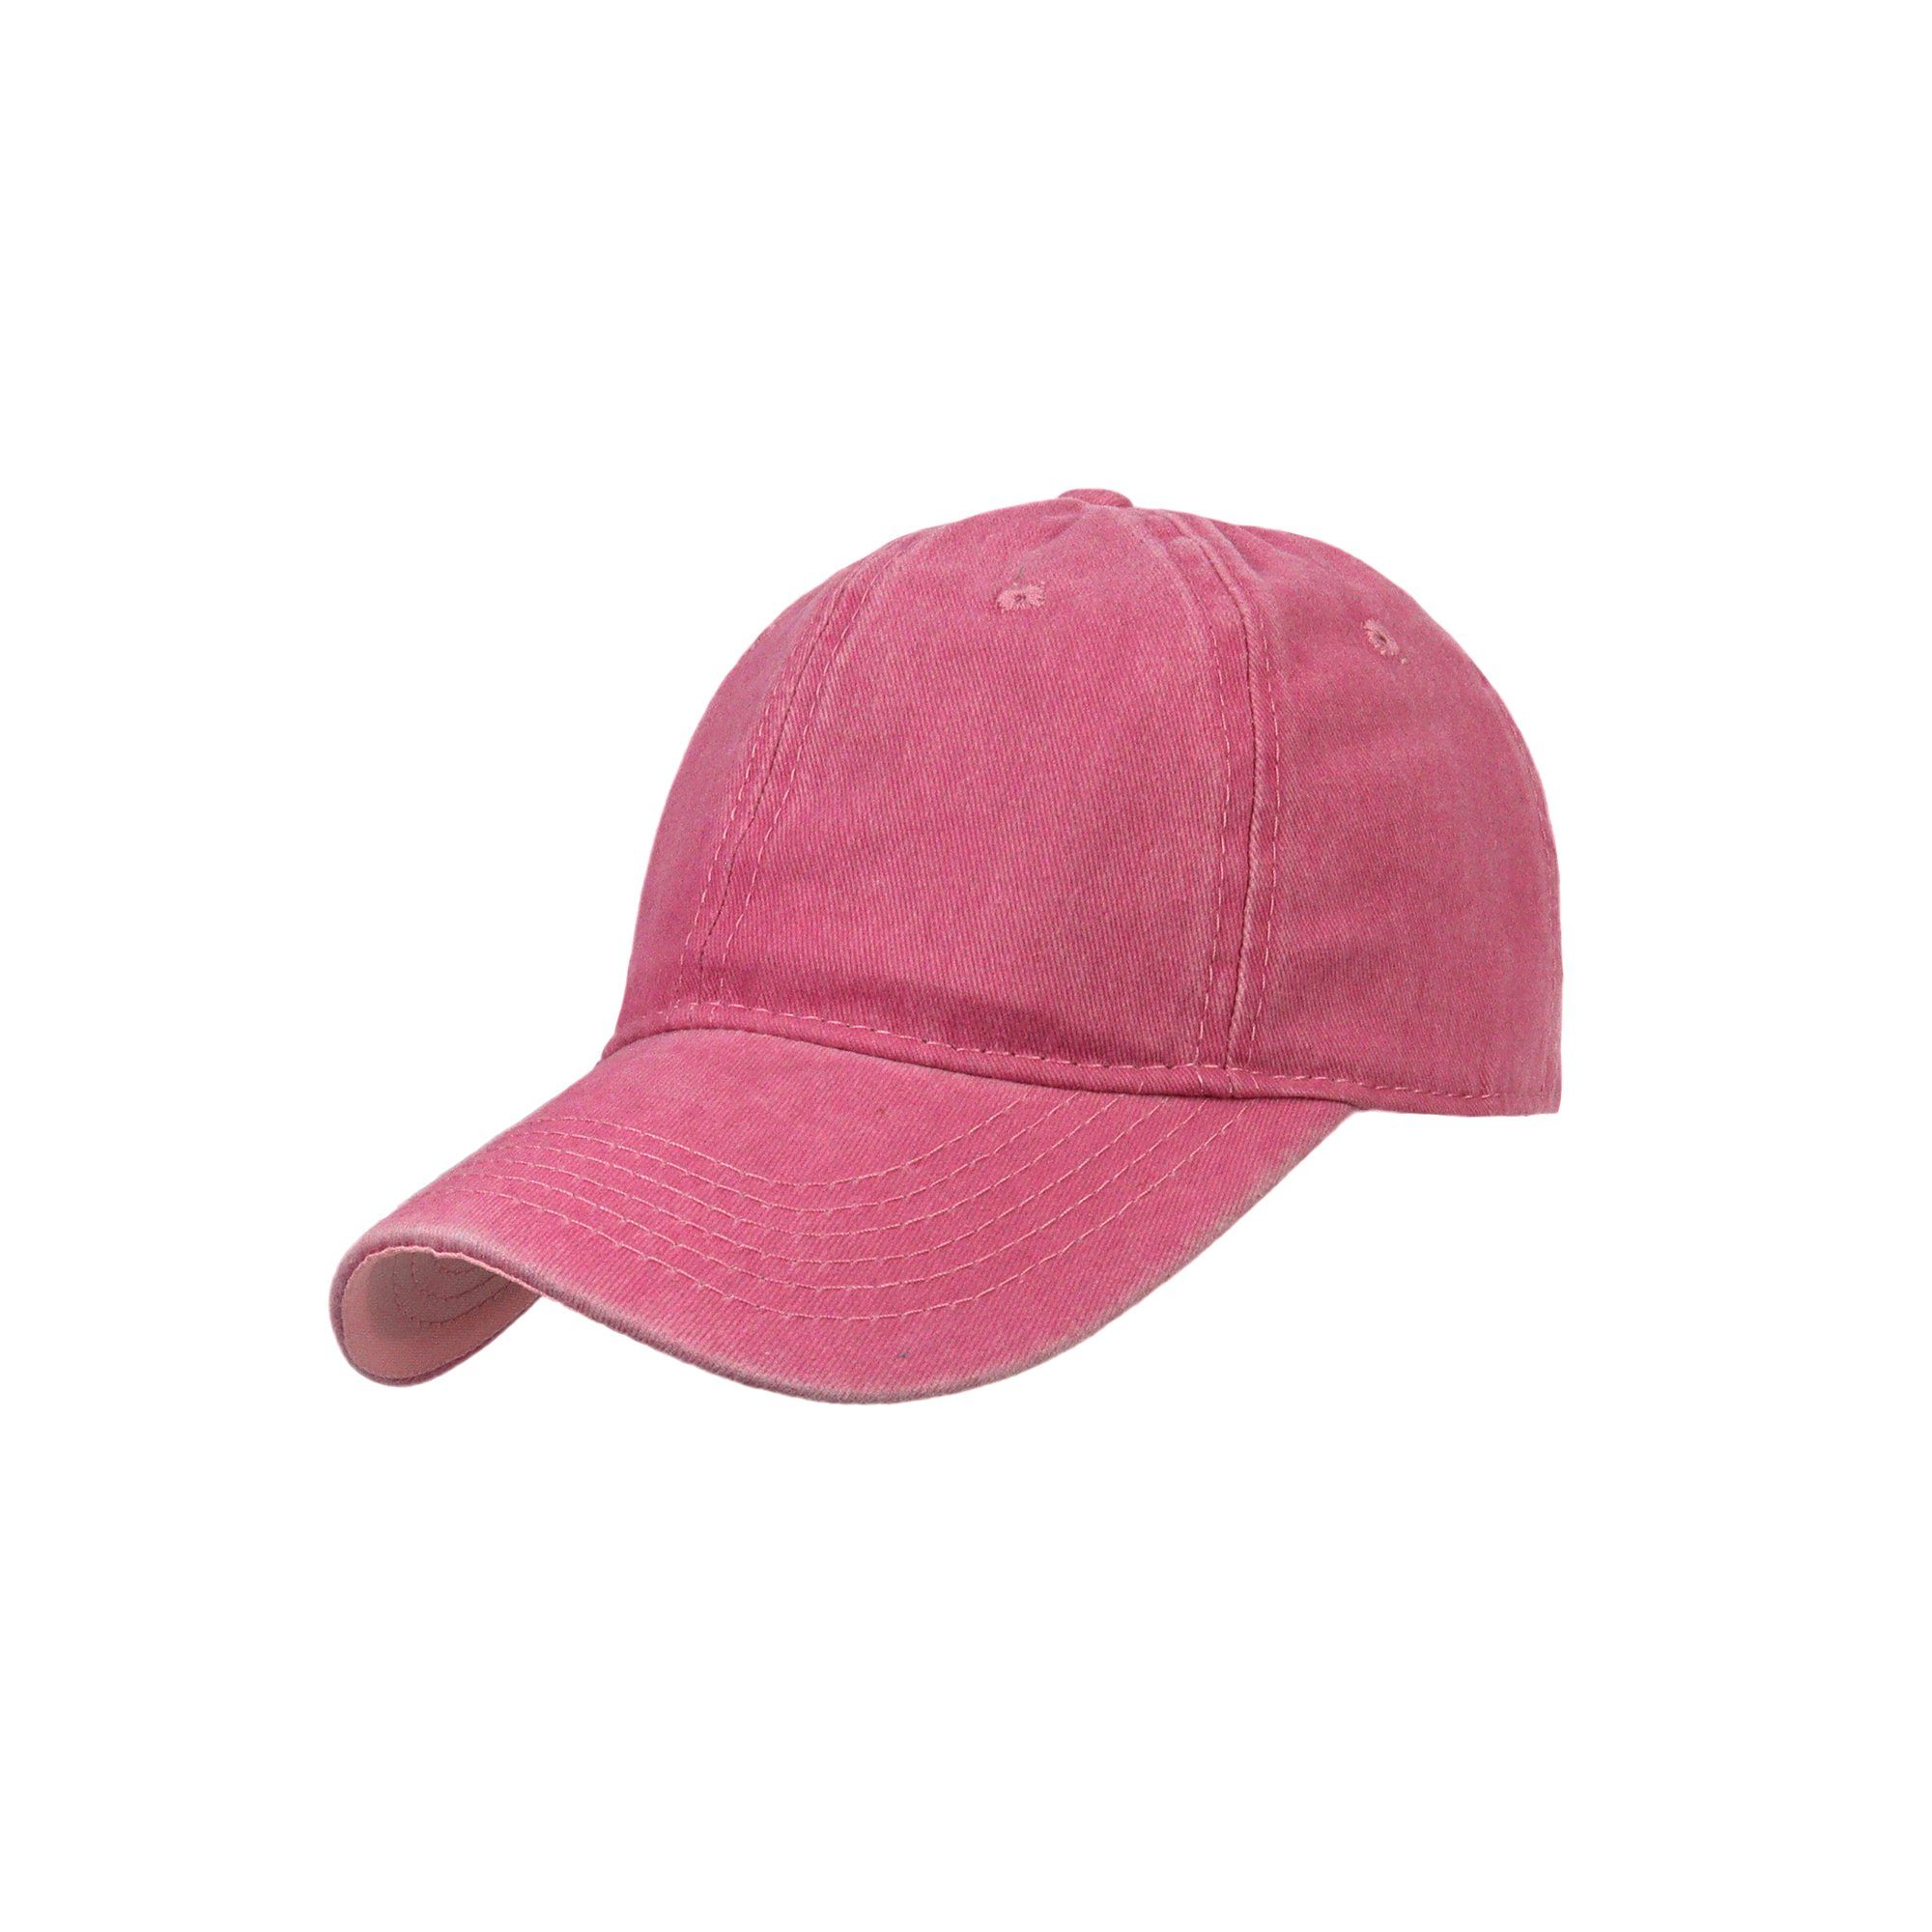 ZEBRO Baseball Cap Base Cap mit Belüftungslöcher rosa